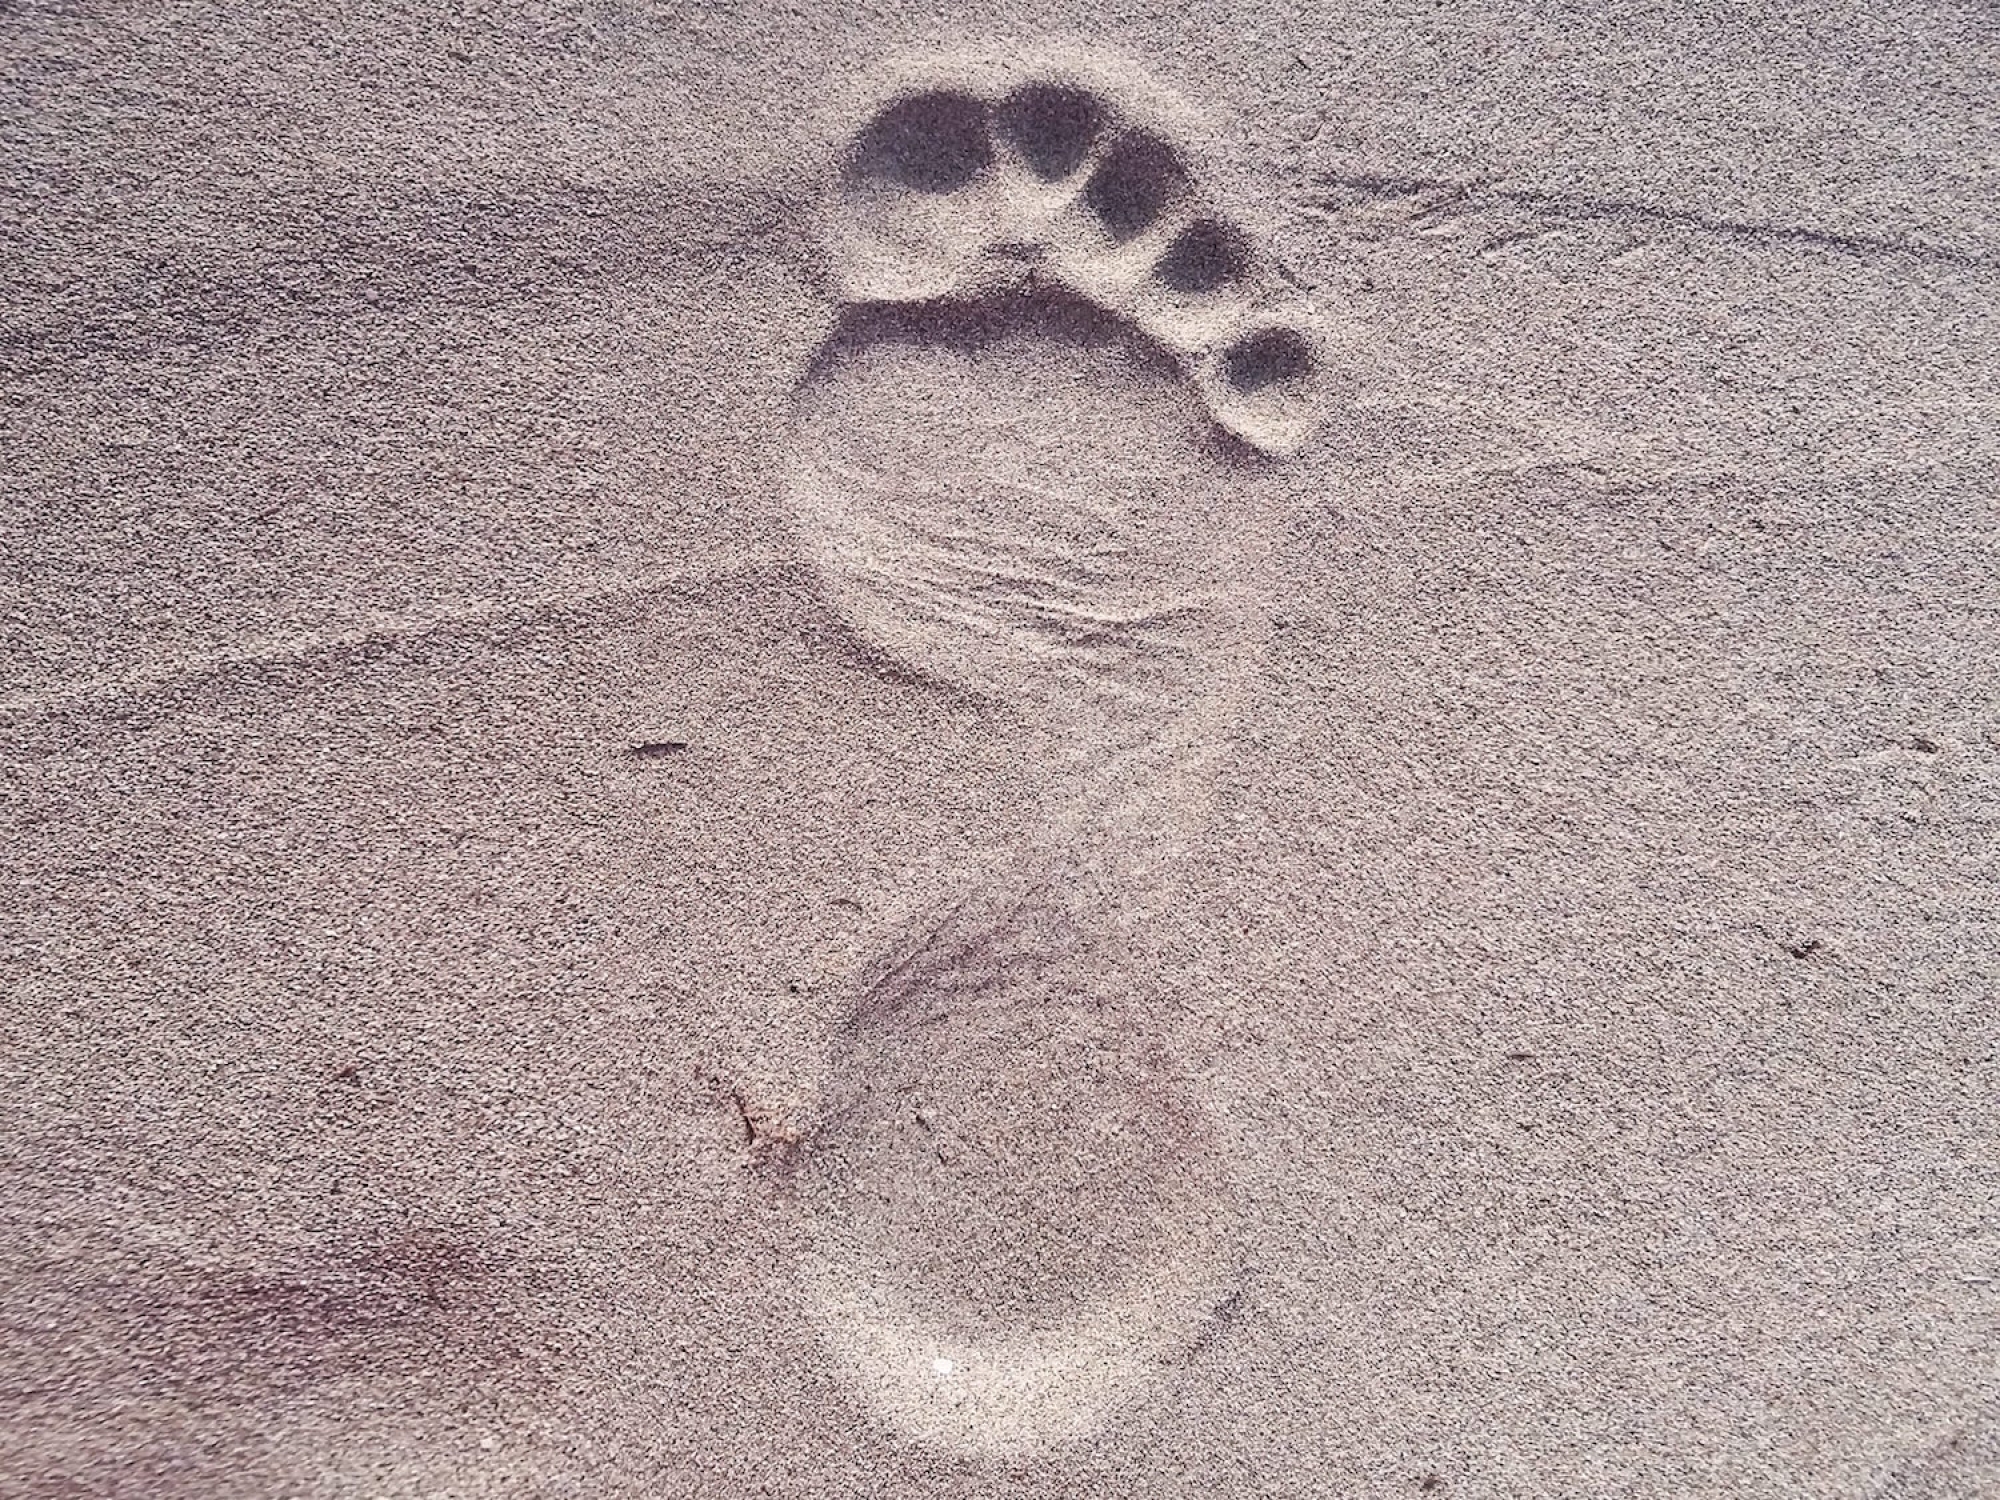 footprint-2624609